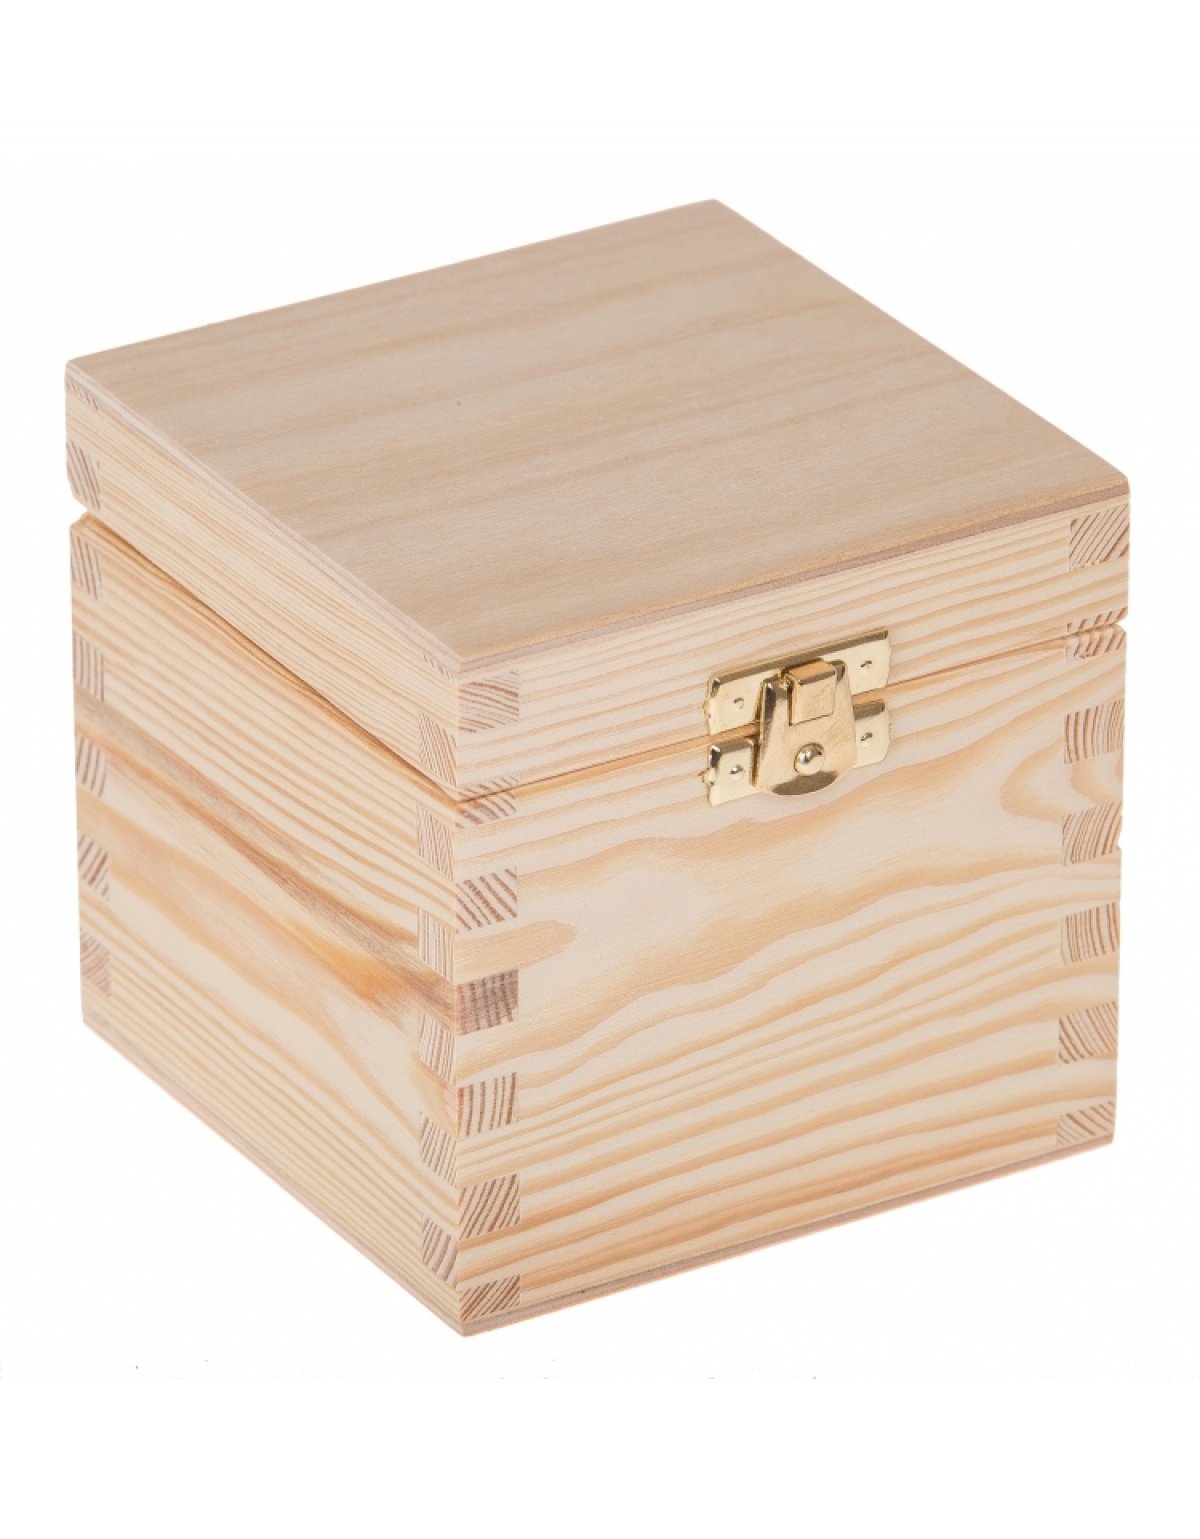 Krabika devn 13,5x13,5x10,7 cm - zapnn